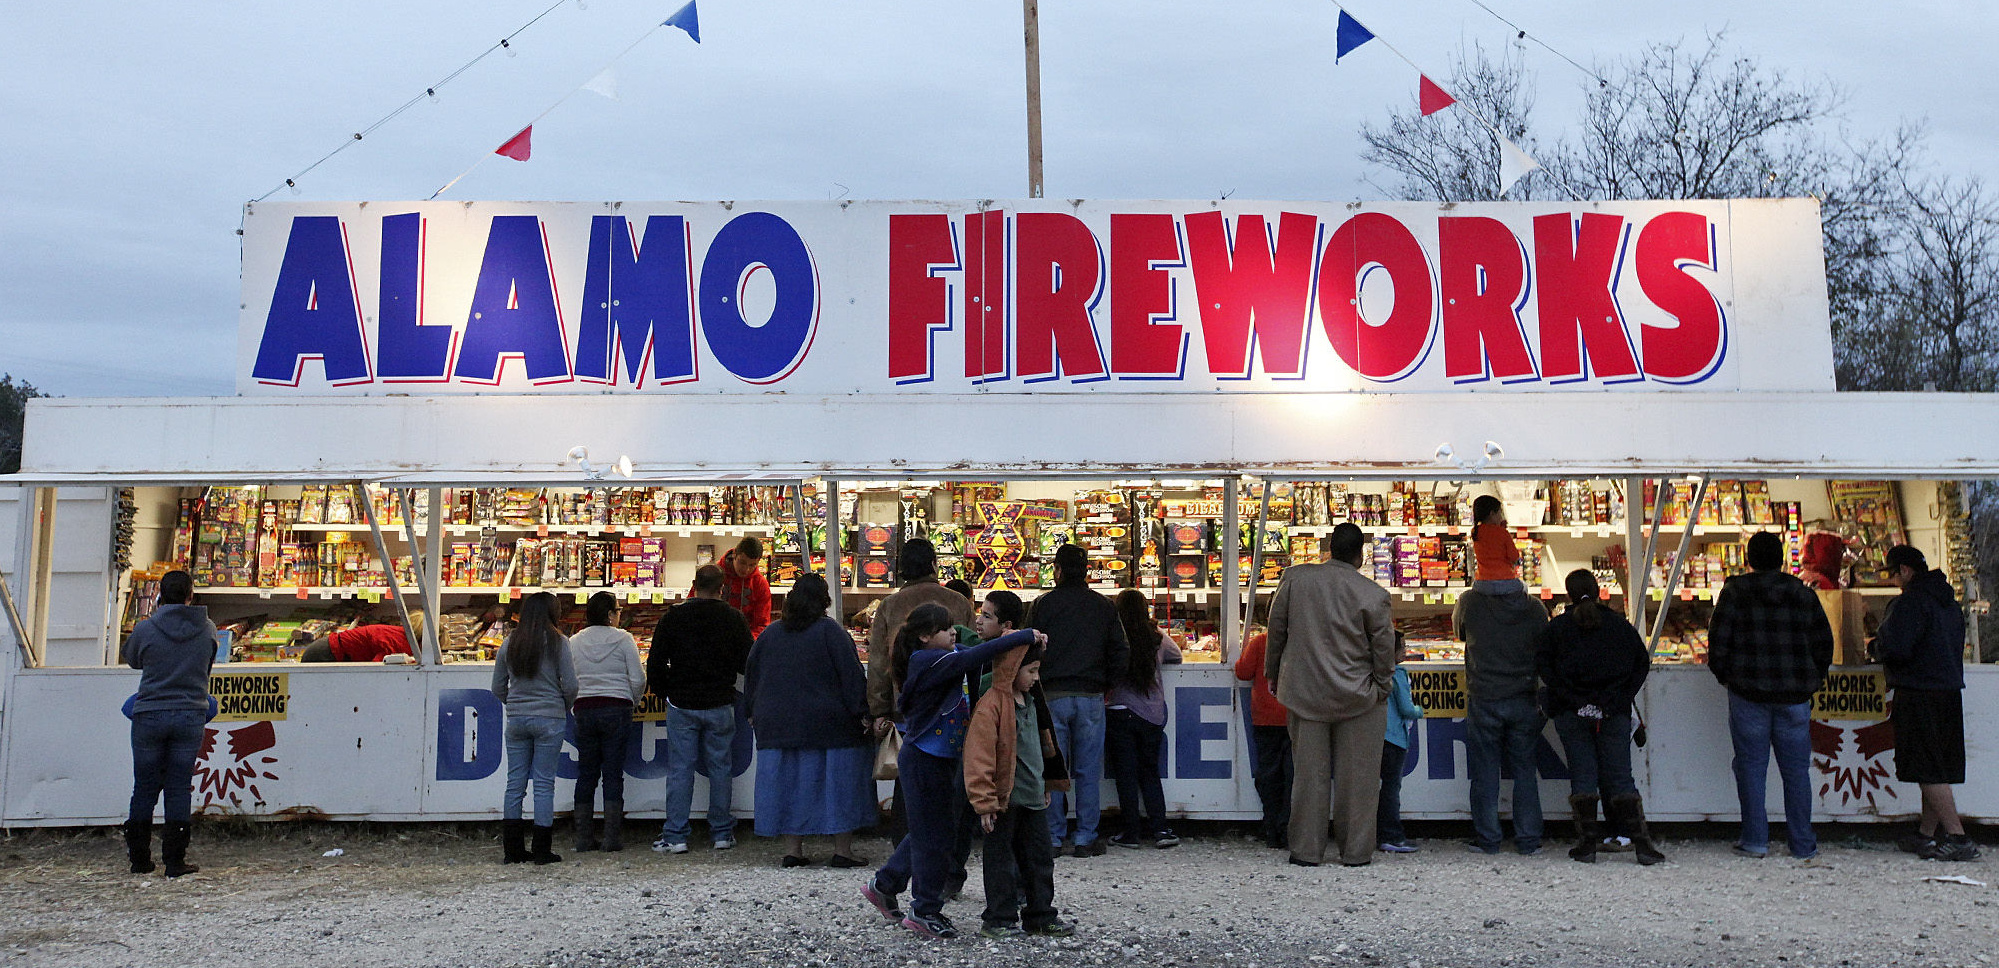 Alamo Fireworks looking to build new store near Cibolo - San Antonio Express-News